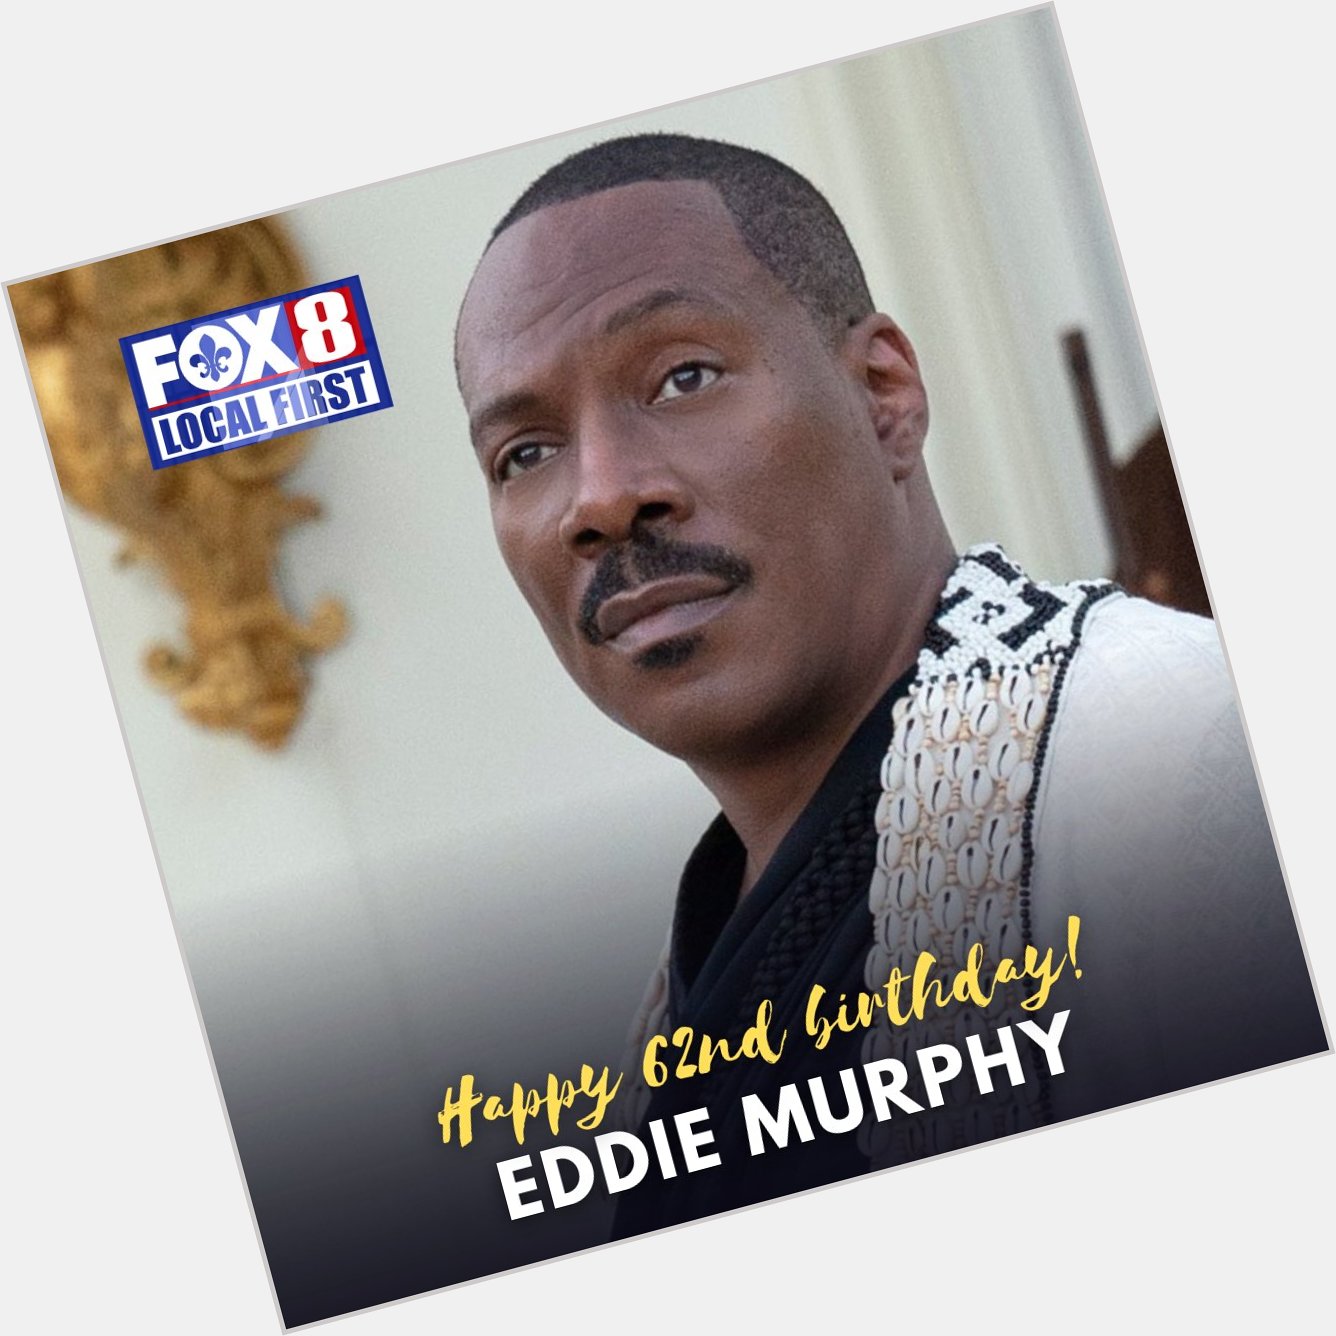 Happy birthday to Eddie Murphy, who turned 62 on Monday! 